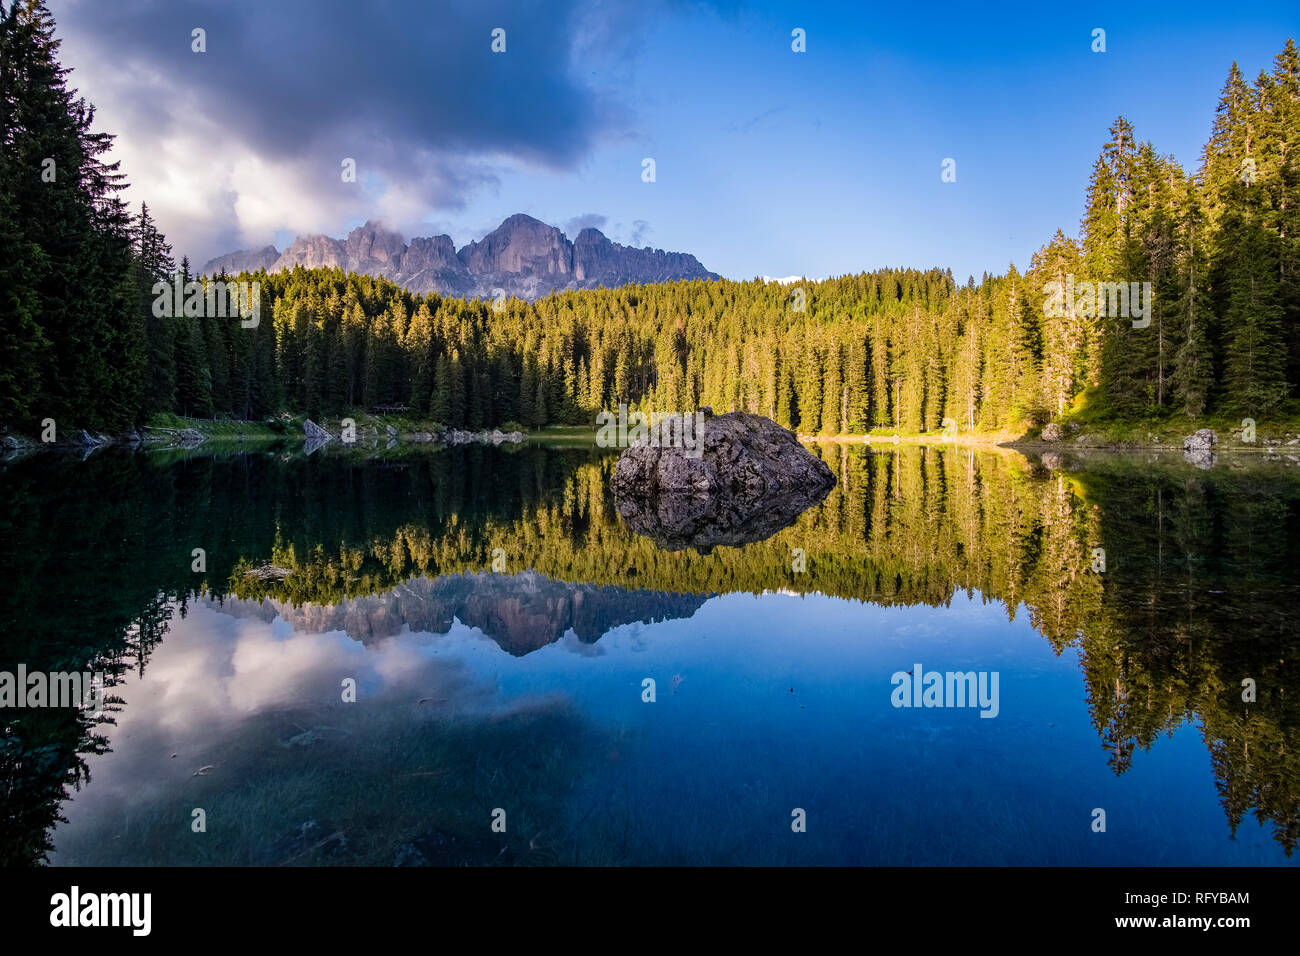 The mountains Rosengarten group, Catinaccio, mirroring in the lake Karersee, Lago di Carezza Stock Photo